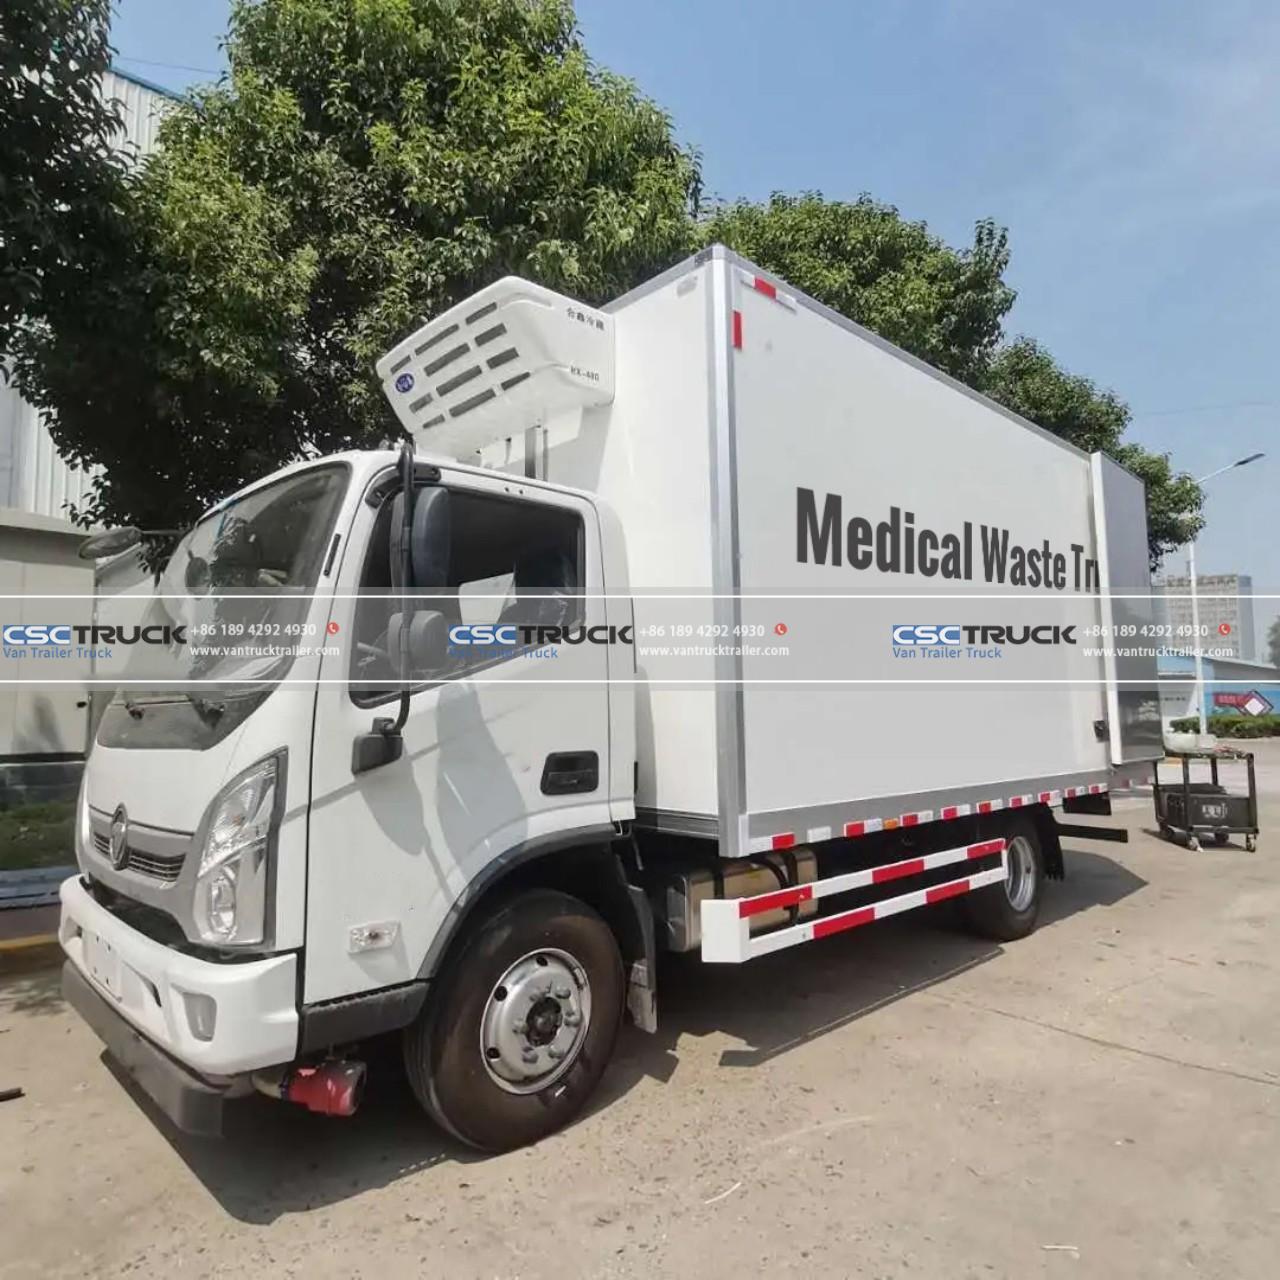 Medical waste truck (2)